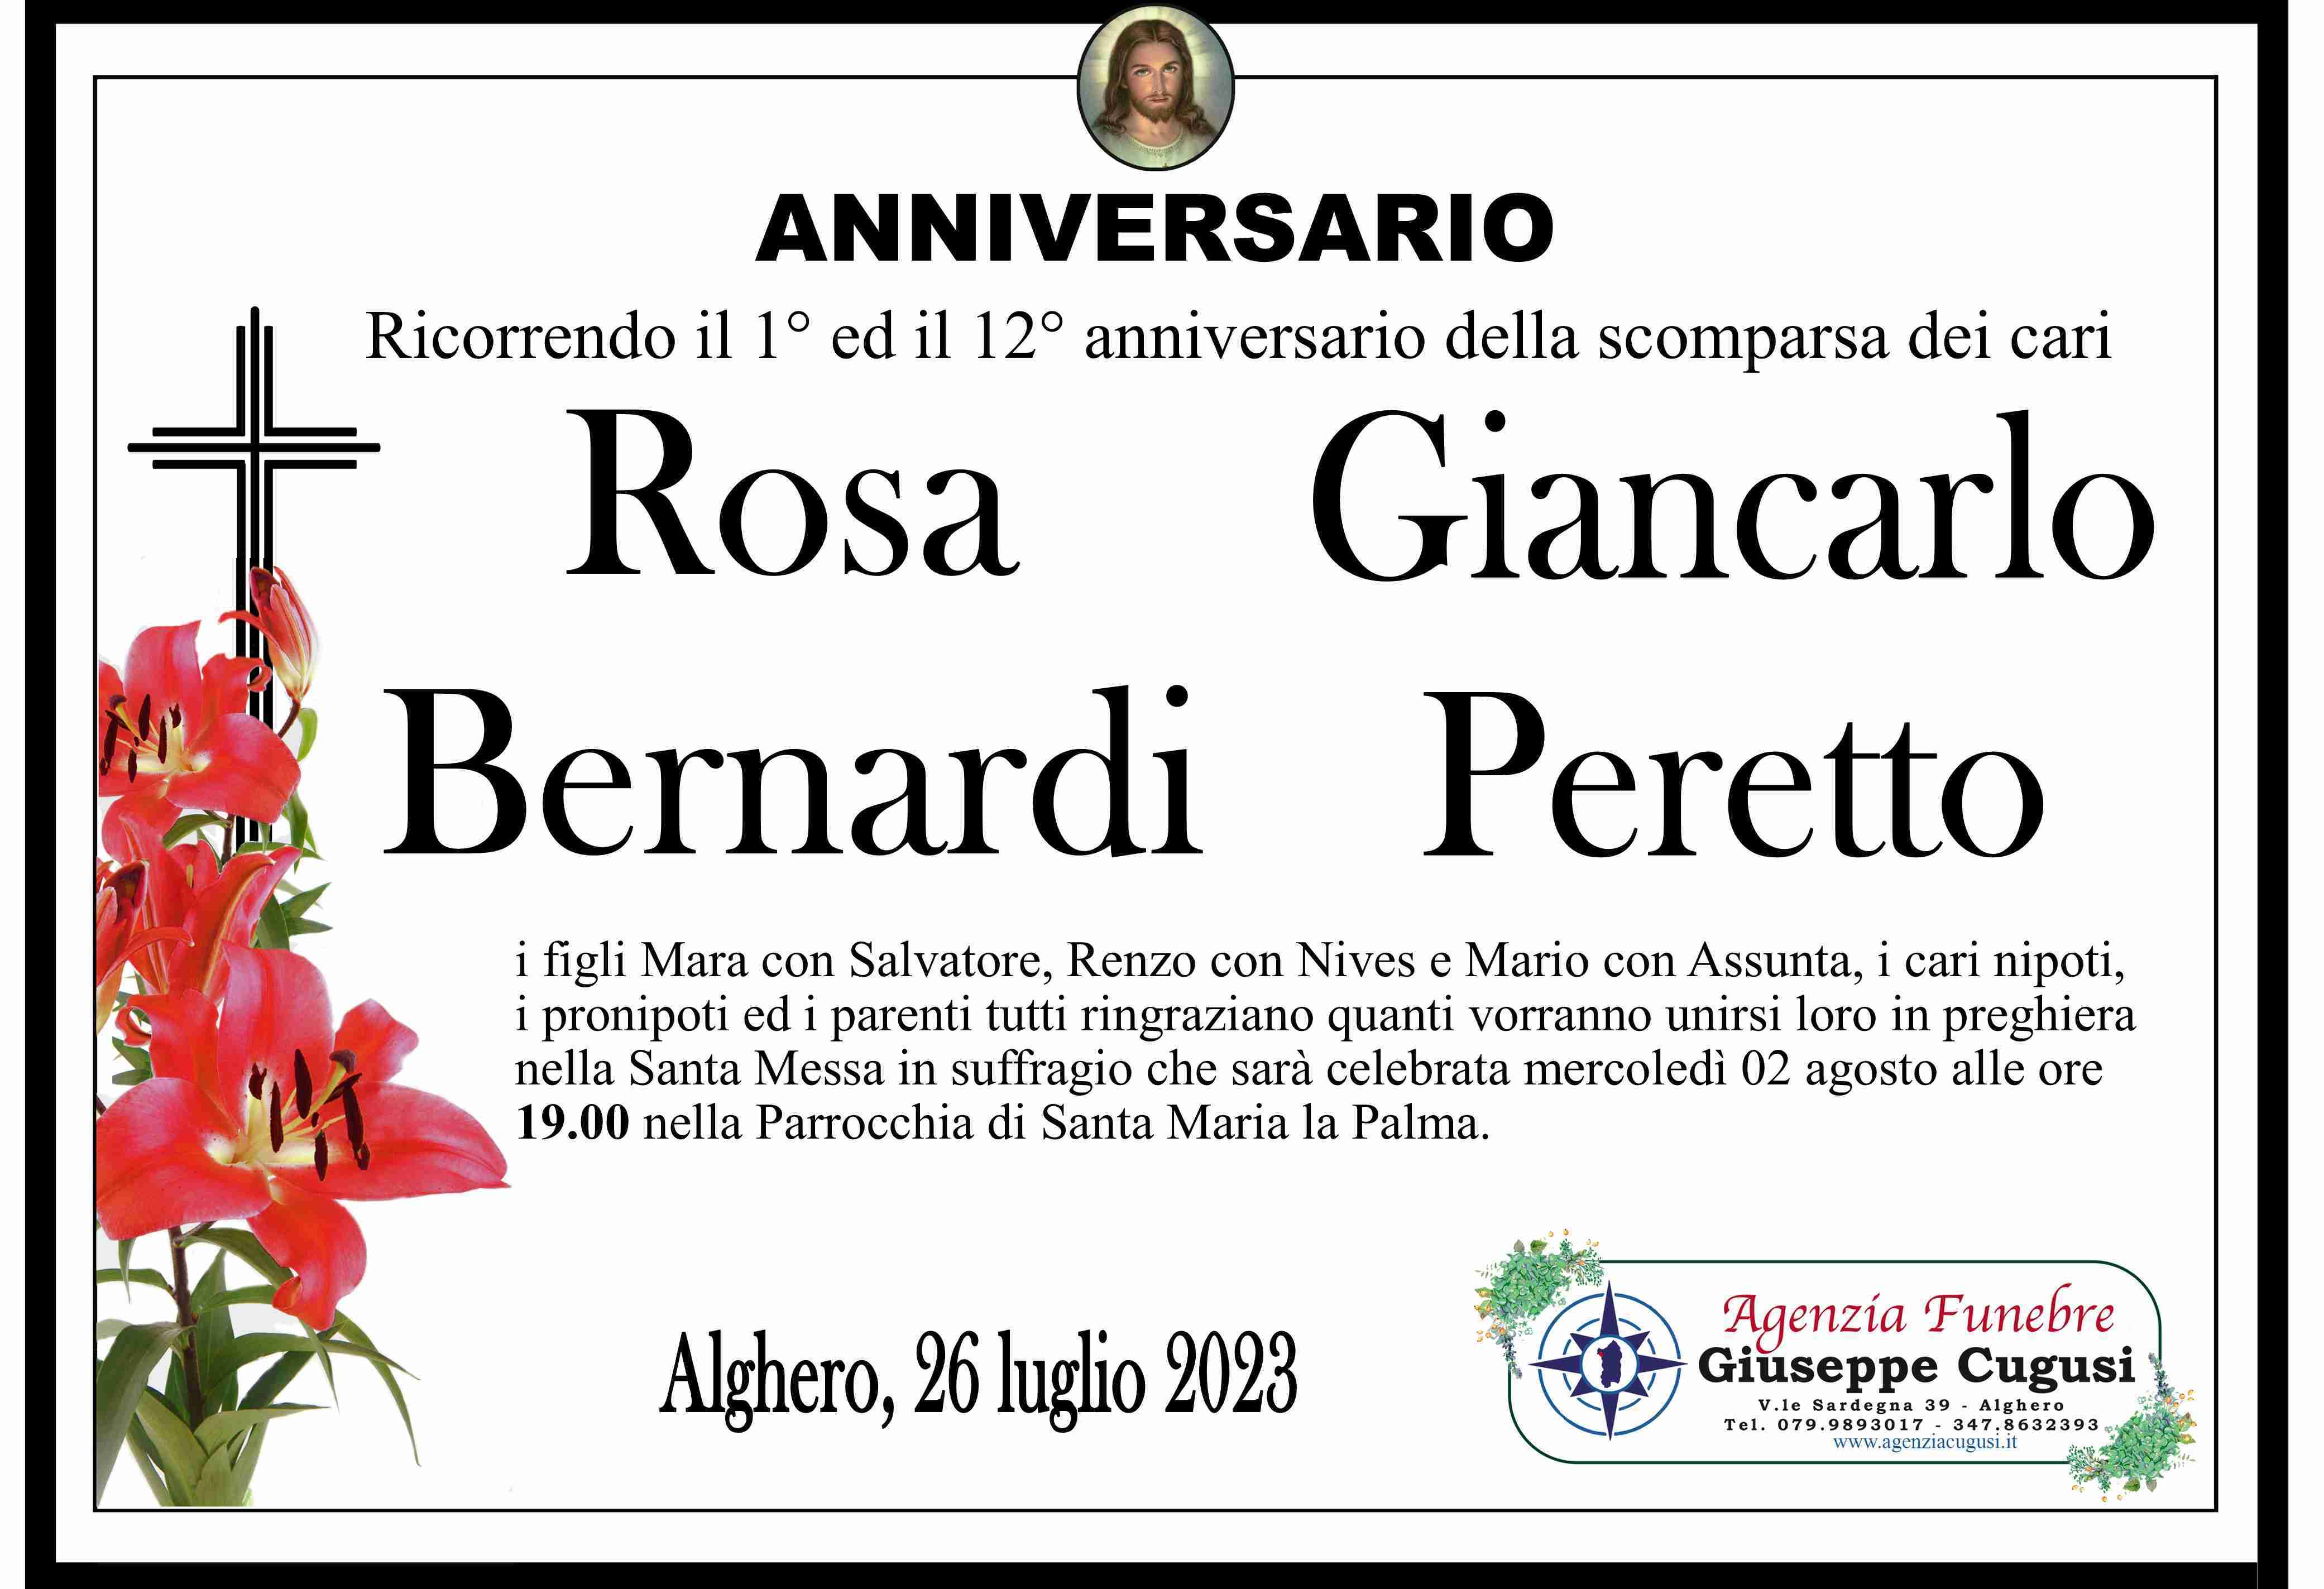 Rosa Bernardi e Giancarlo Peretto